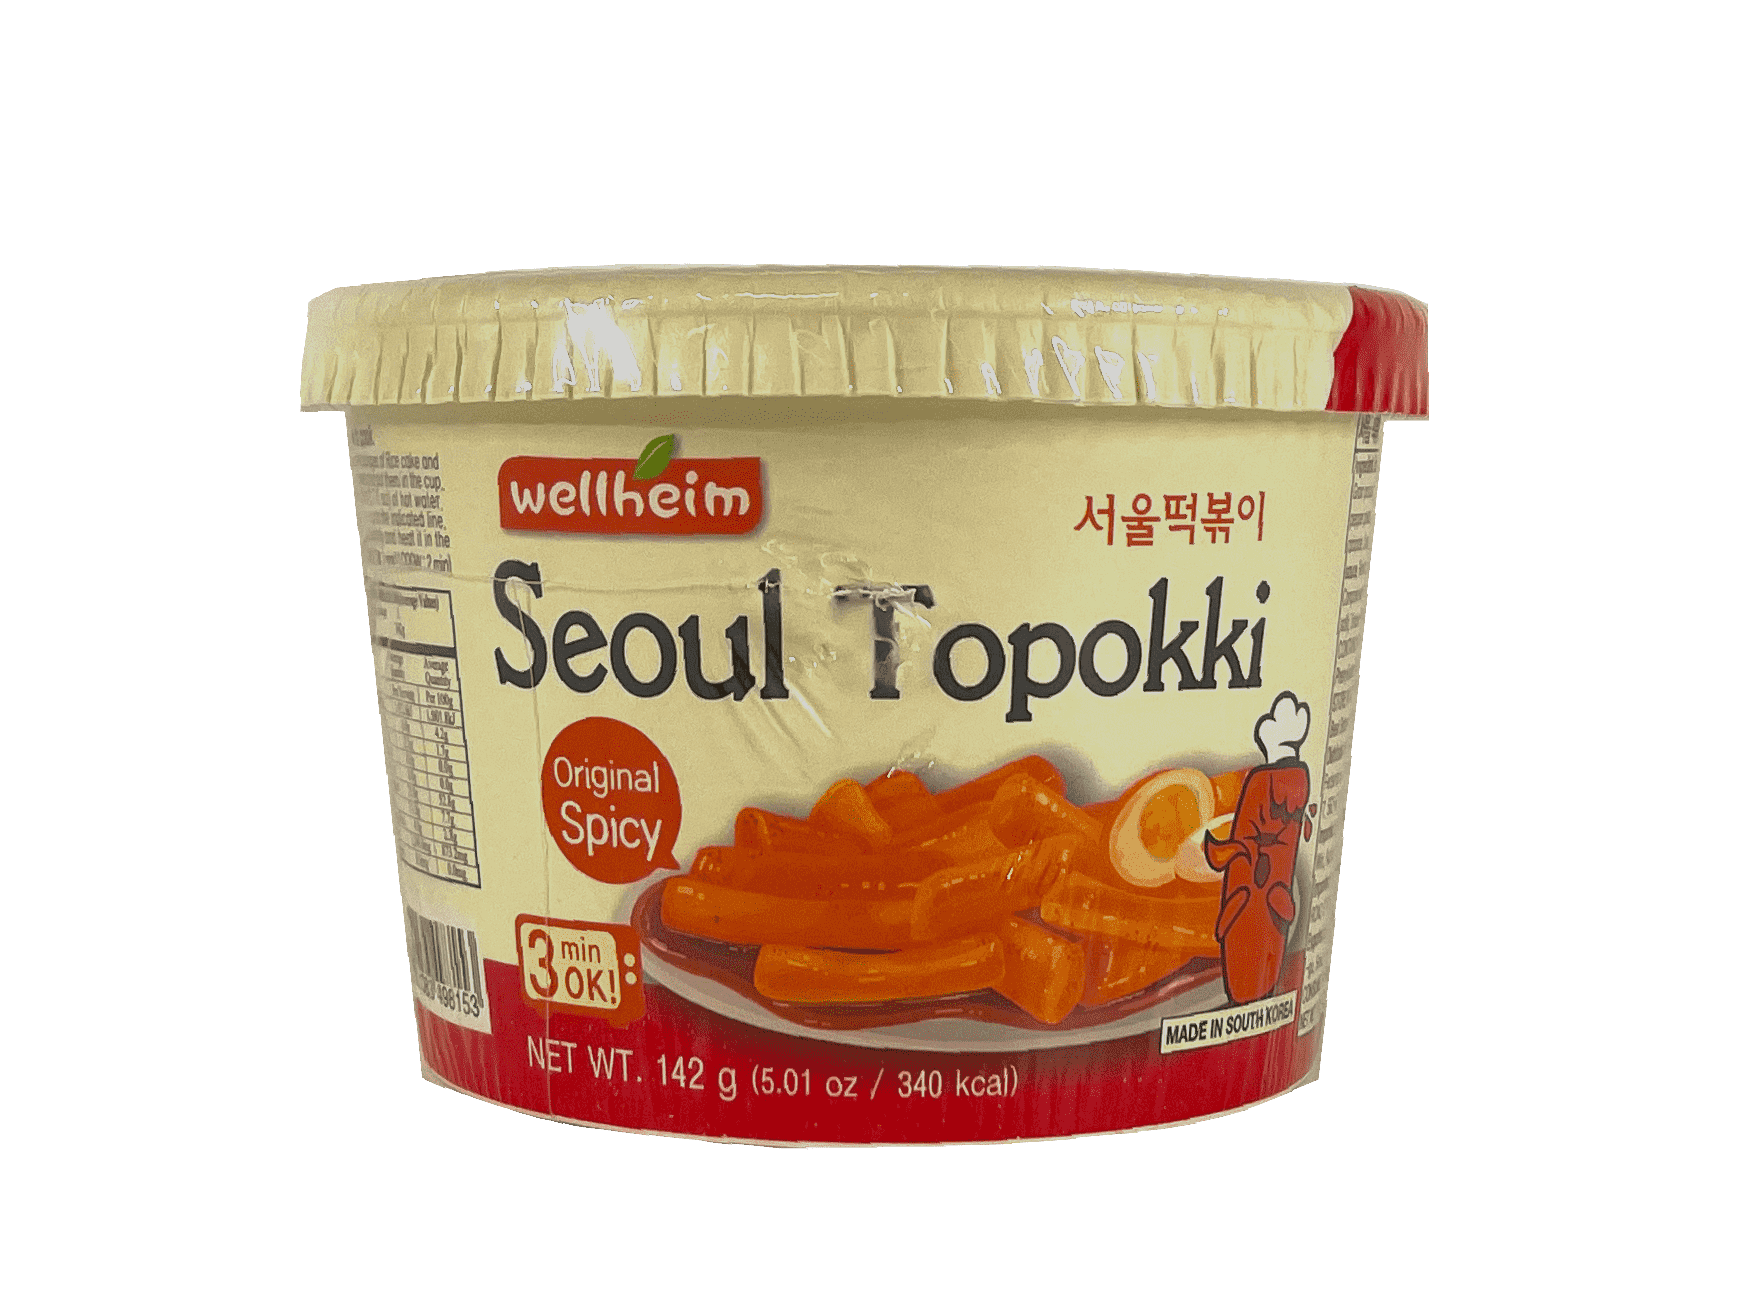 Instant Rice Cakes Seoul Topokki Spicy Taste 142g Wellheim Korean